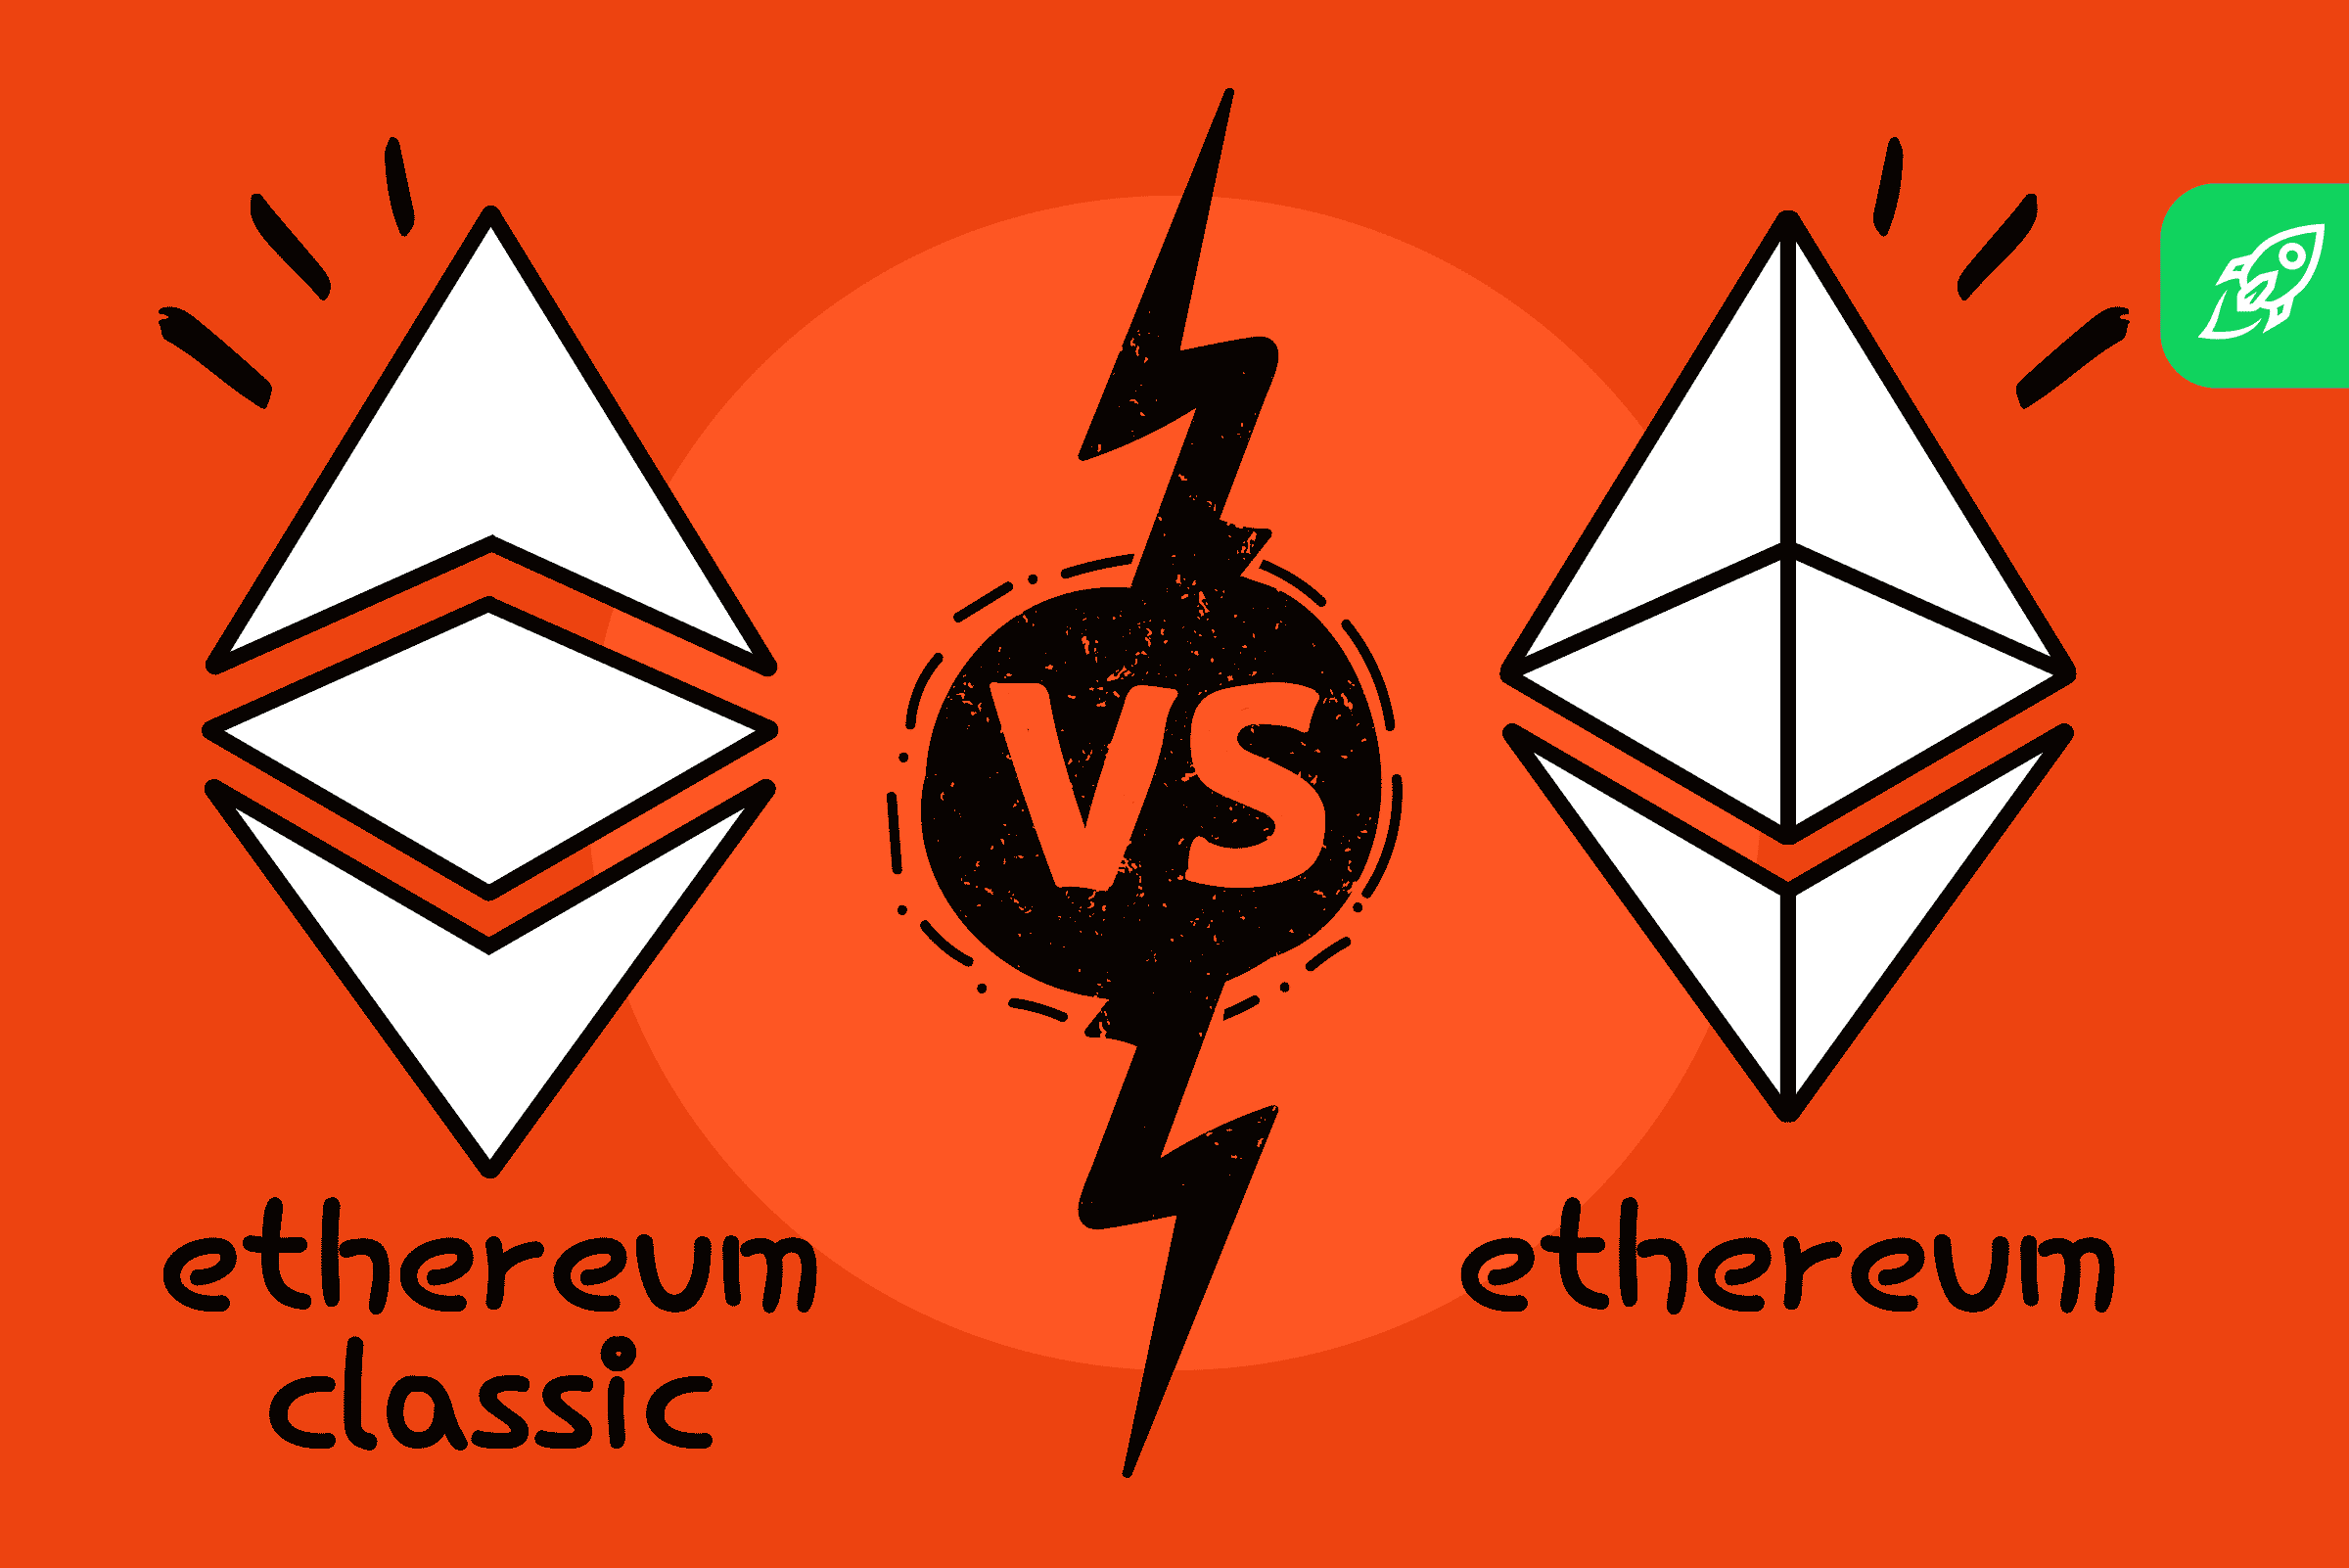 investiția în ethereum vs ethereum clasic